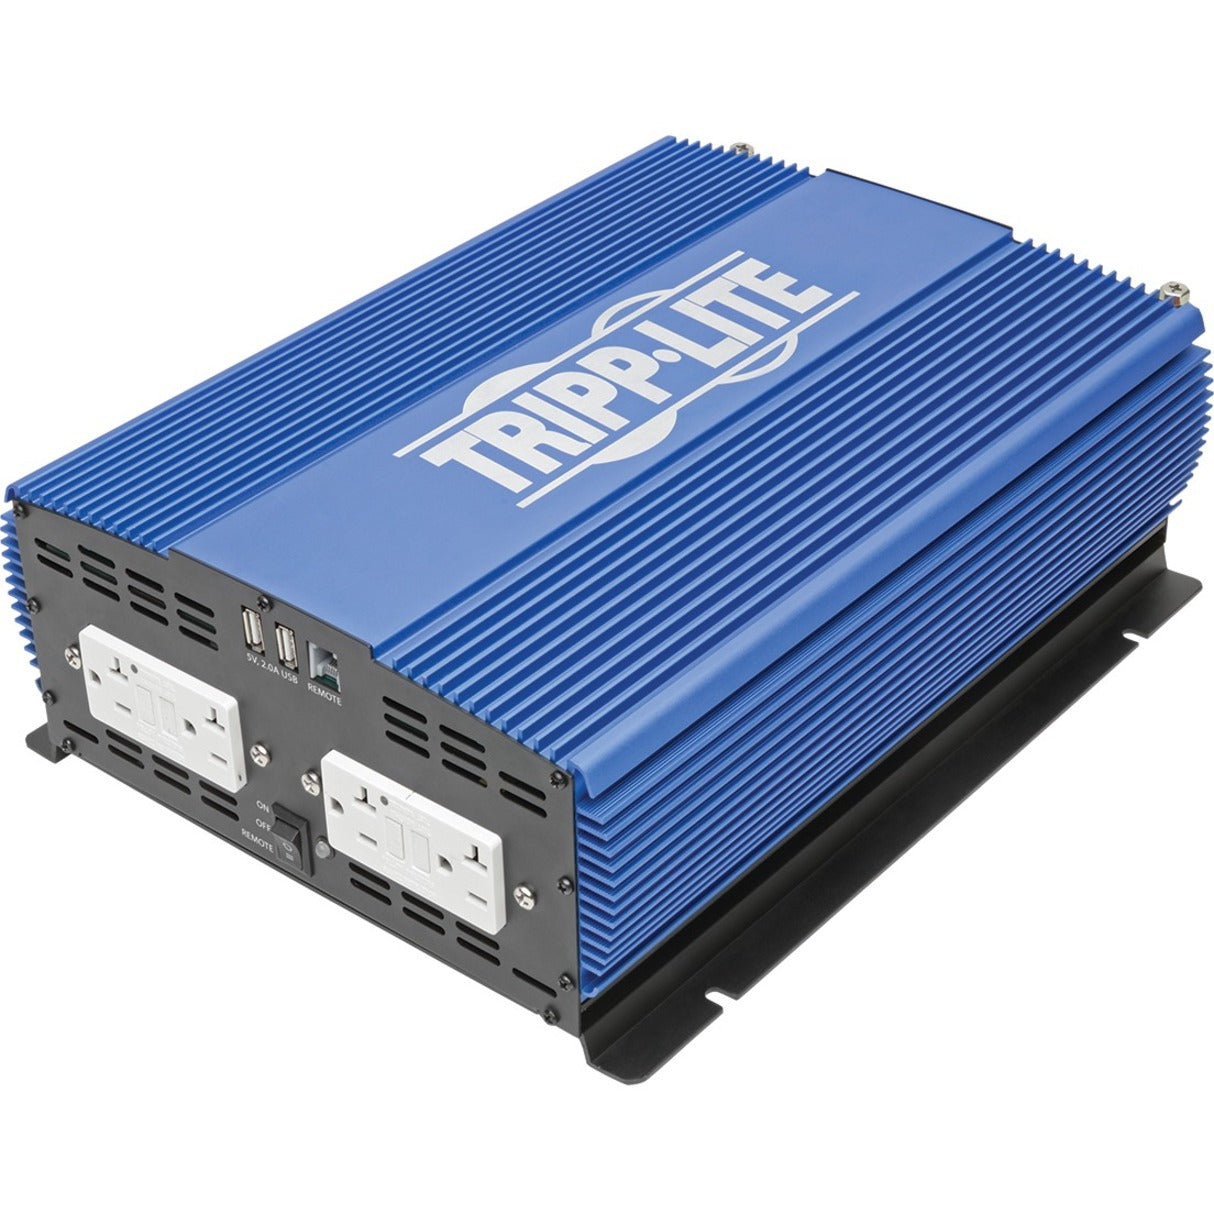 Tripp Lite PINV2000HS Power Inverter 2000W Kompakt Mobil Tragbar 4 Steckdosen 2 USB-Anschlüsse